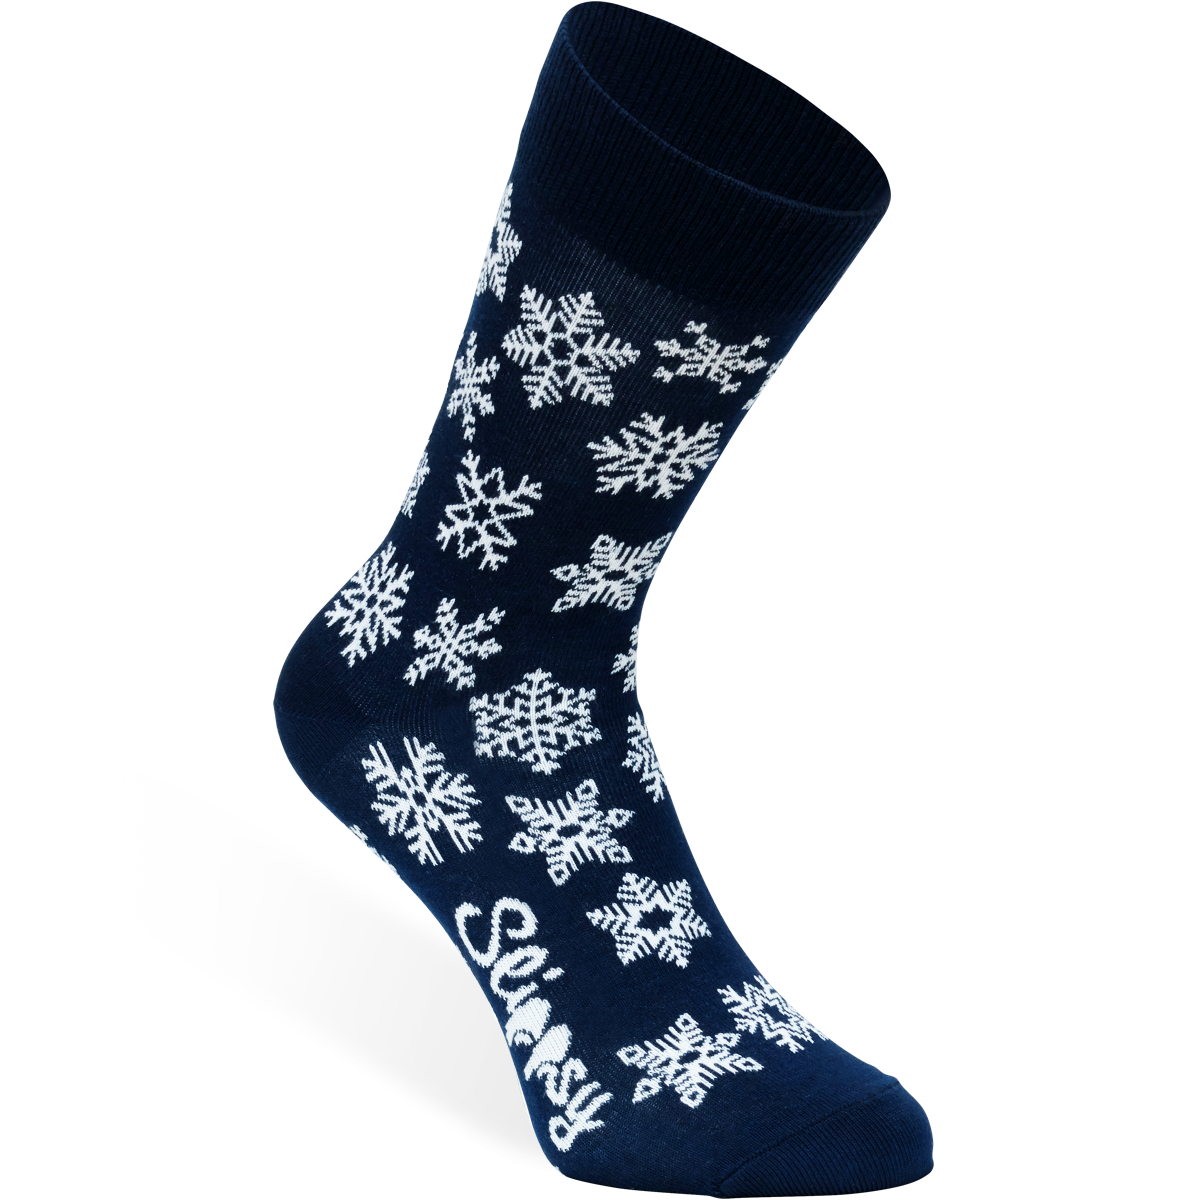 E-shop Slippsy Blue Snowflake socks/43-46